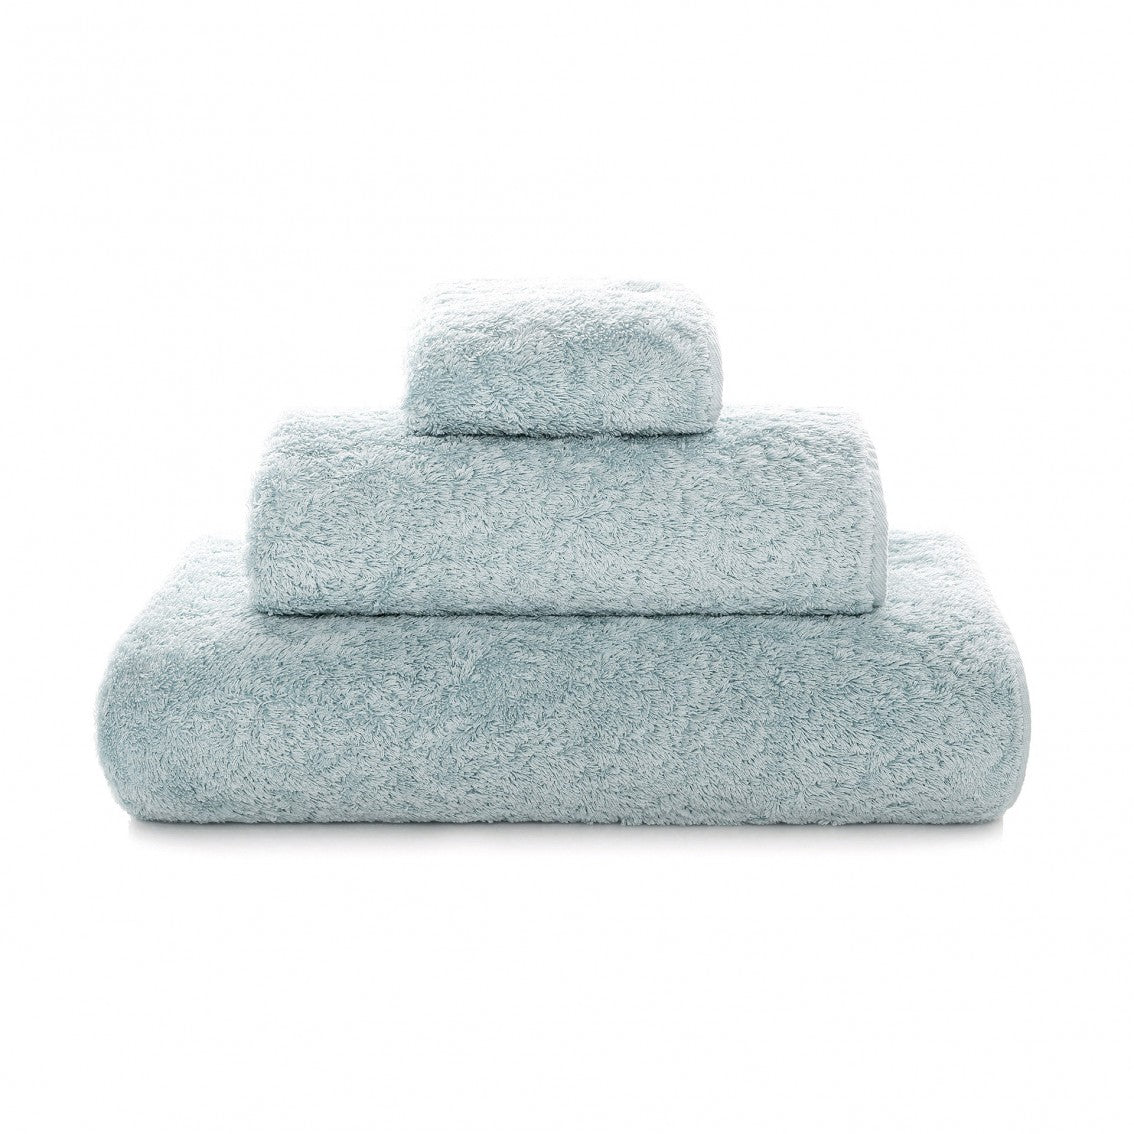 Graccioza Egoist Sea Mist Bath Sheet at Luxurious Beds and Linens